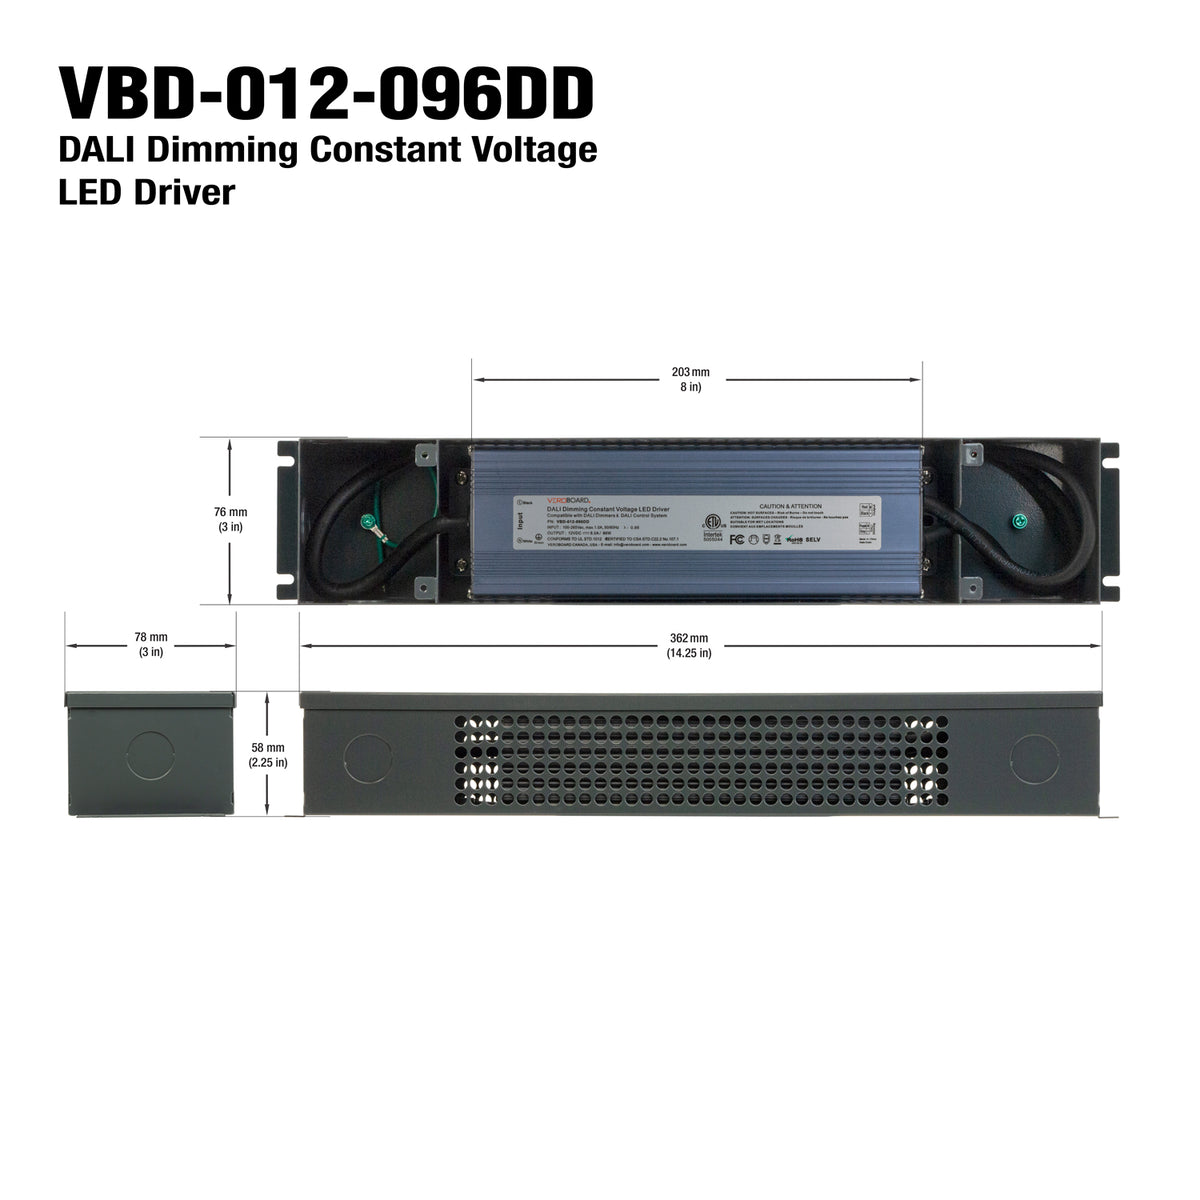 VBD-012-096DD Dali Dimmable Constant Voltage LED Driver, Veroboard